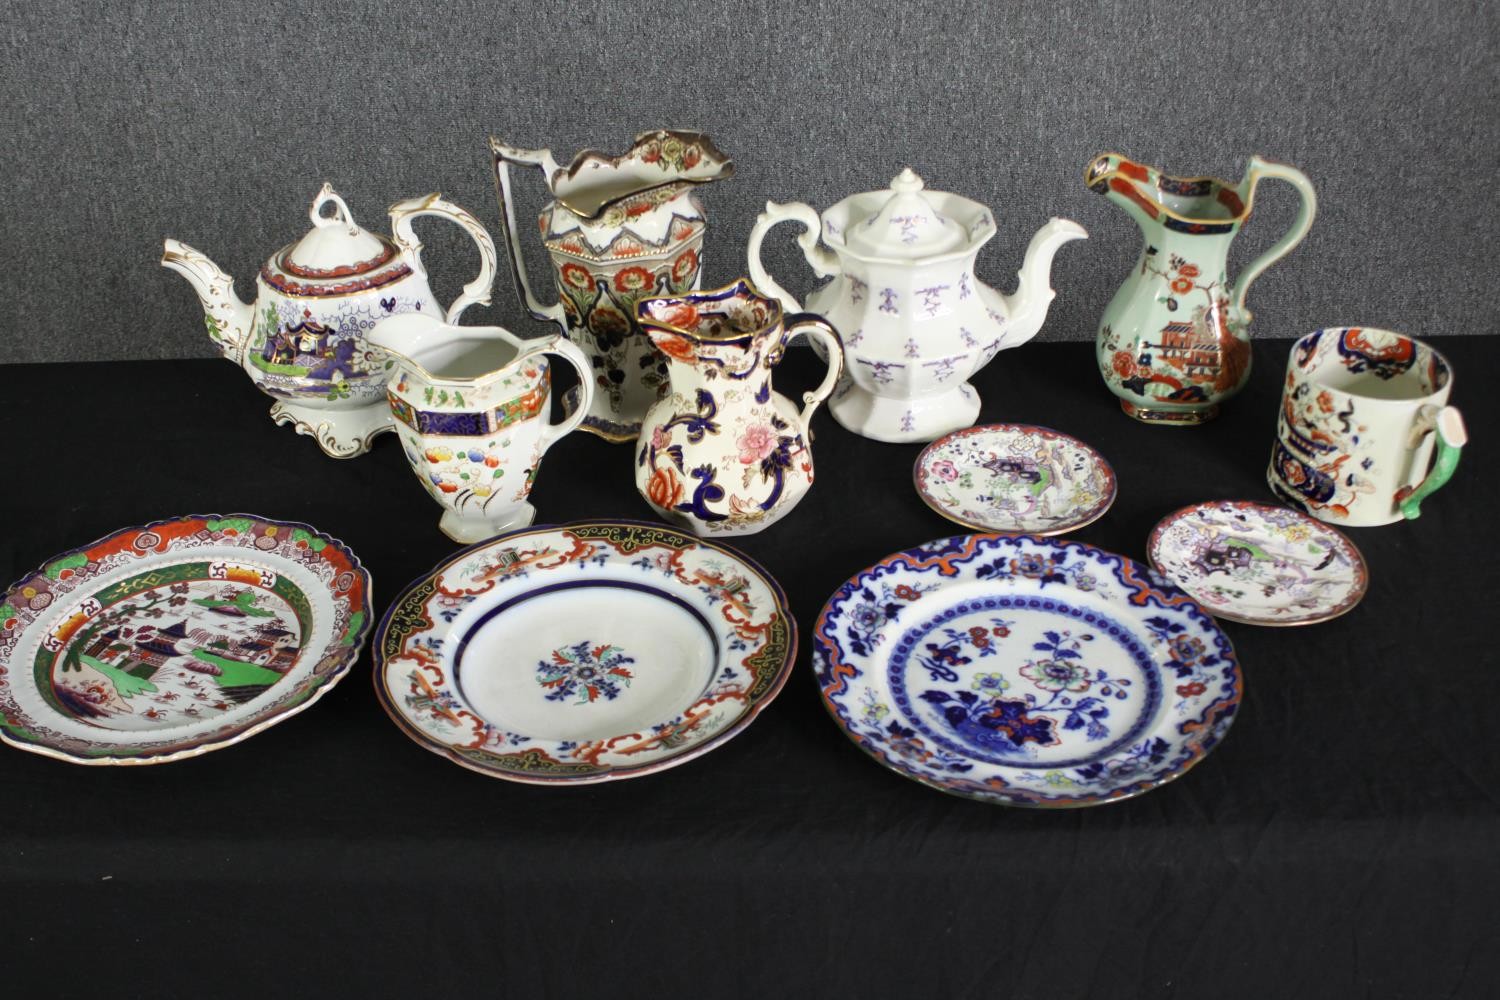 A group of various Staffordshire porcelain tea pots, jugs and plates. H.21cm. (largest).